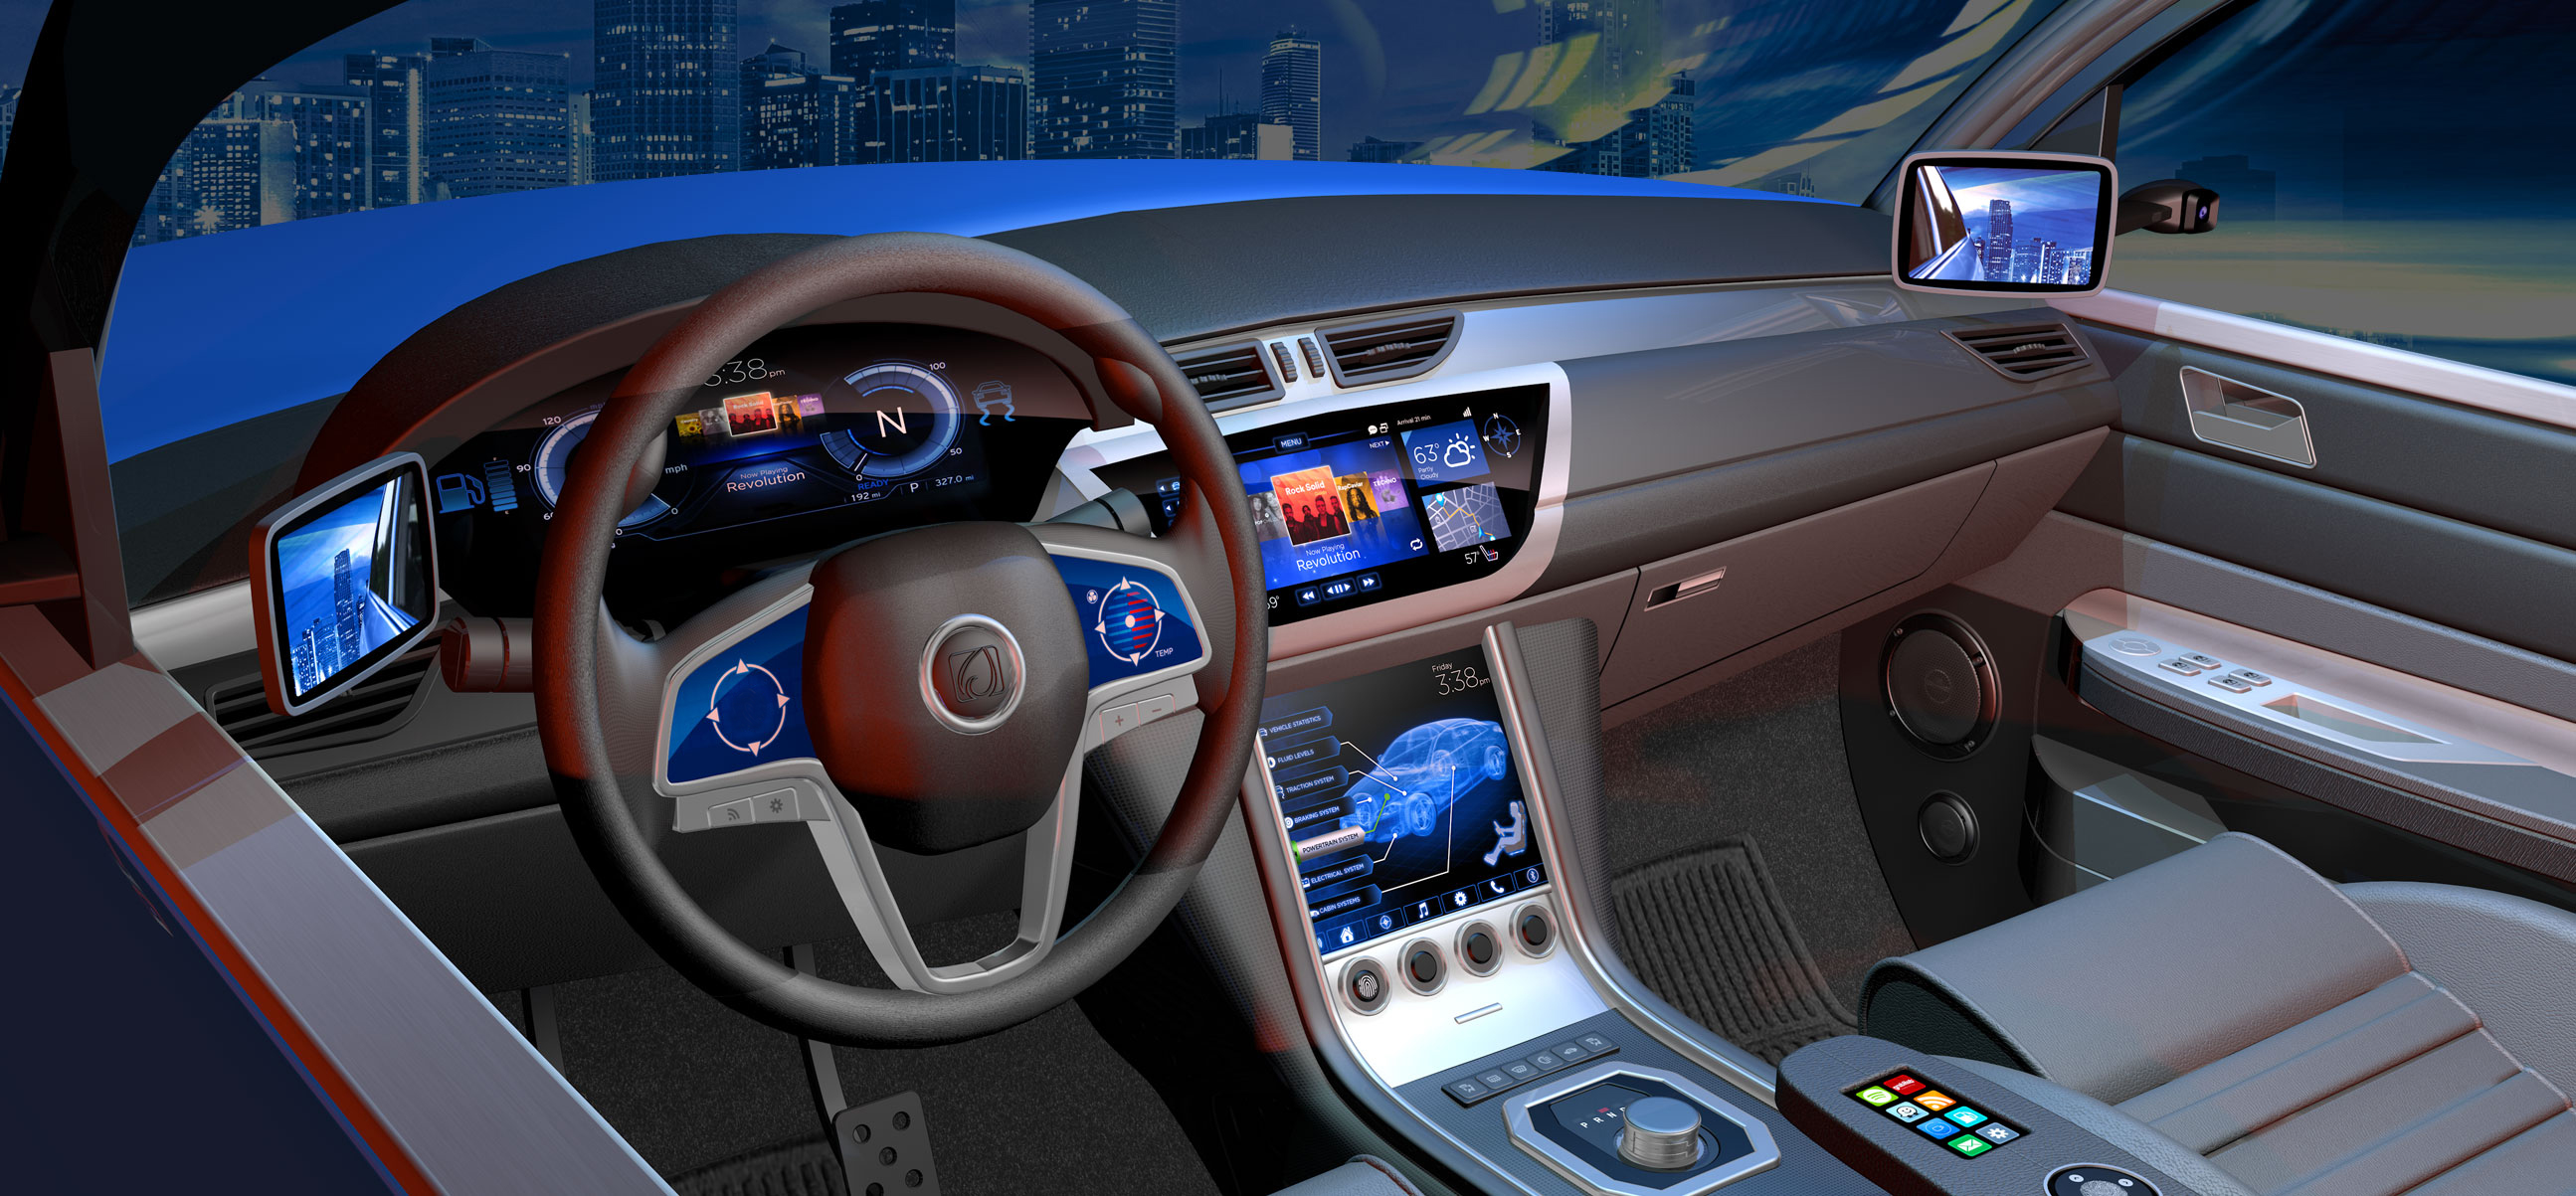 Automotive Market, Force-Sensing Touch Displays, Biometrics